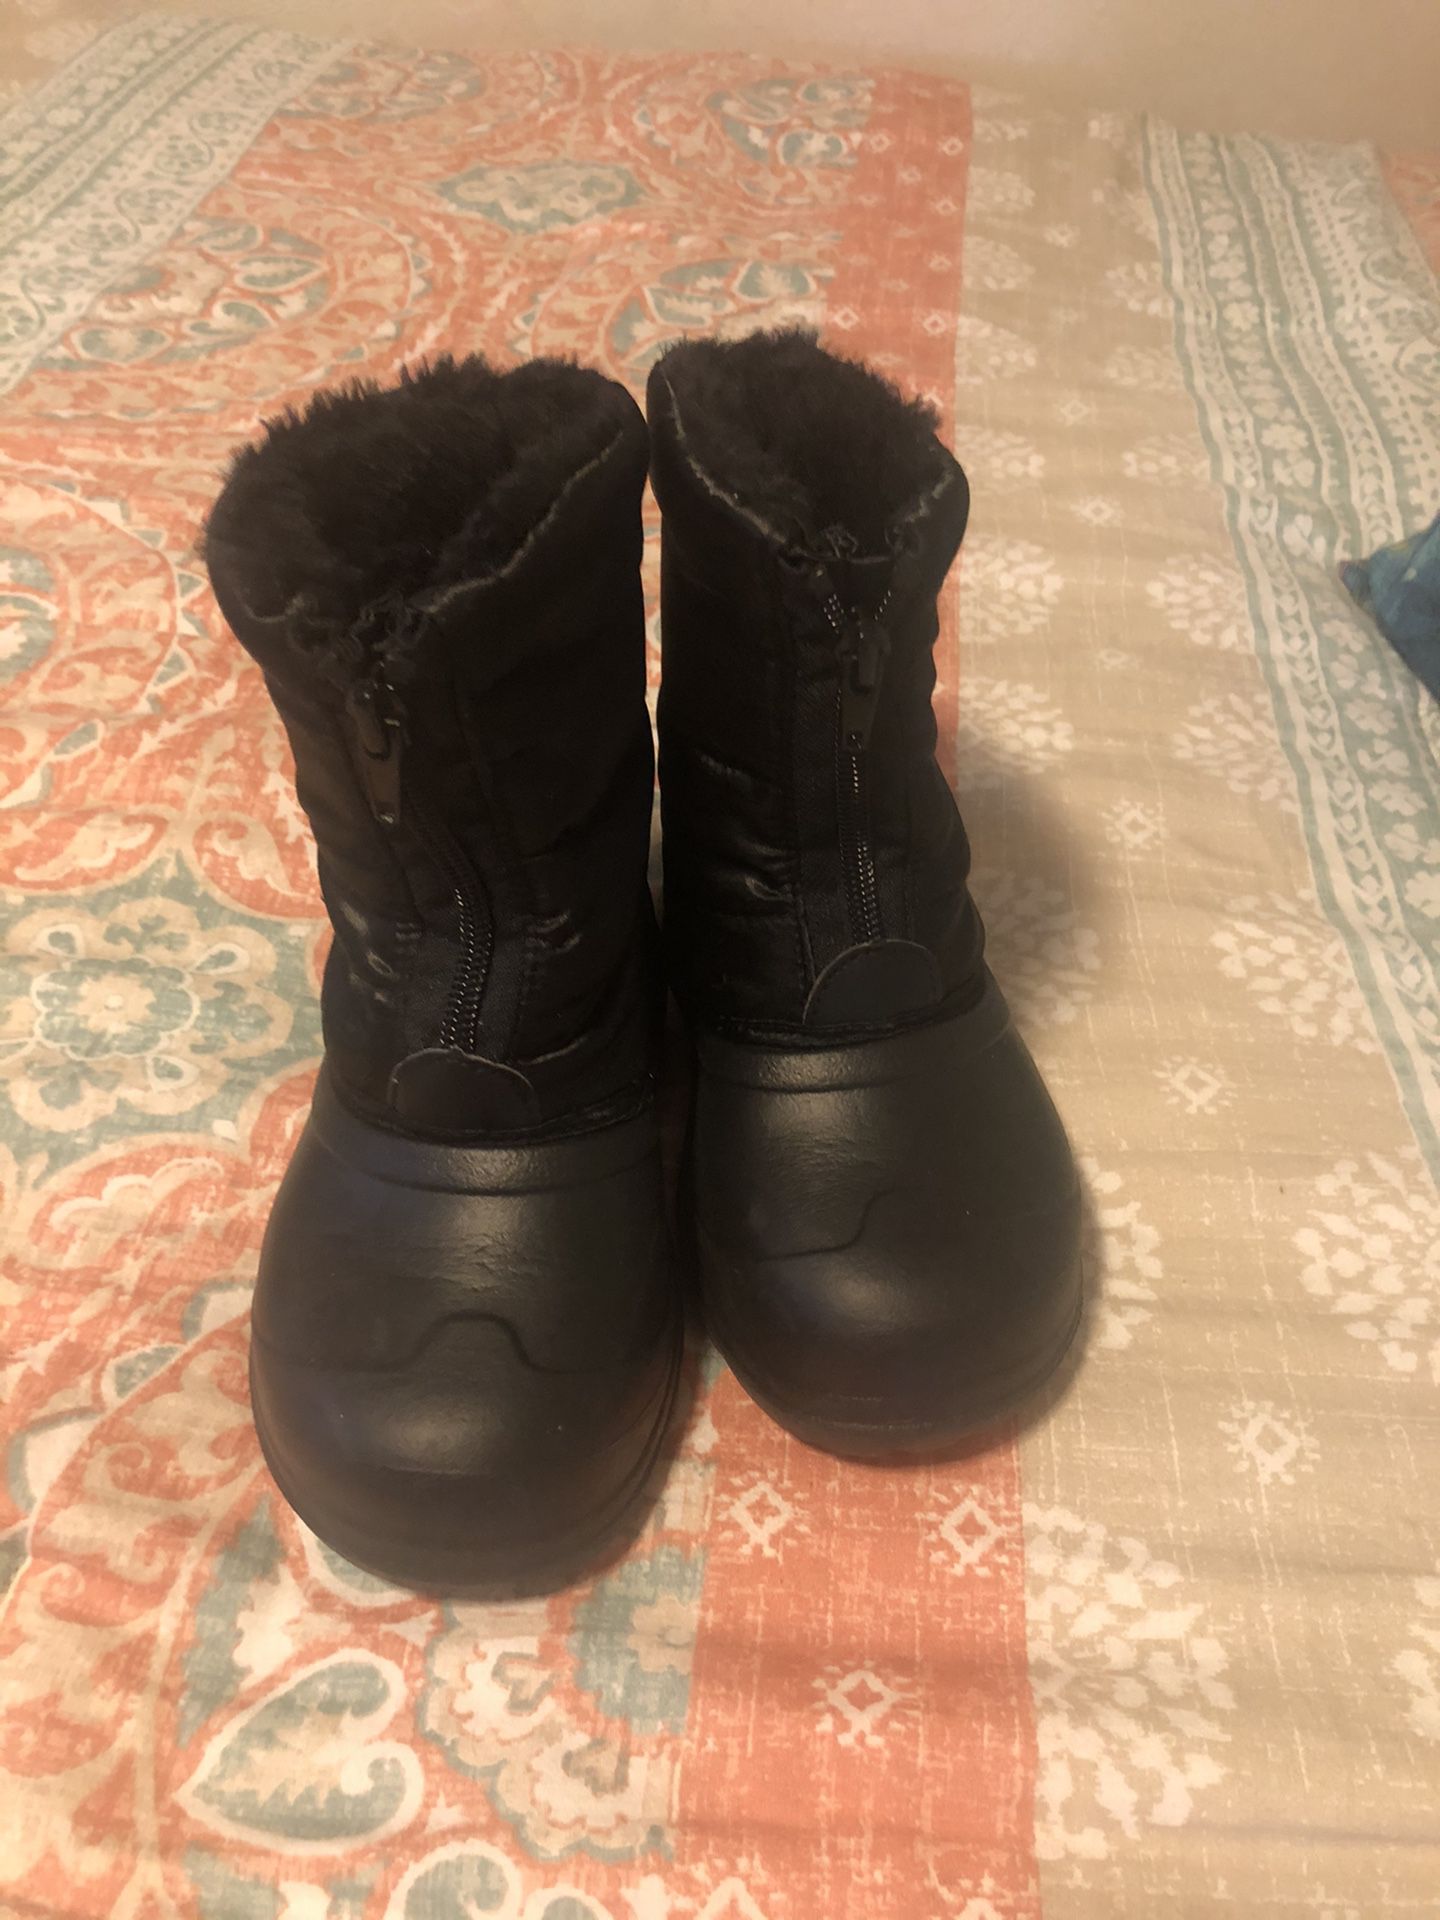 Kids size 10 snow boots